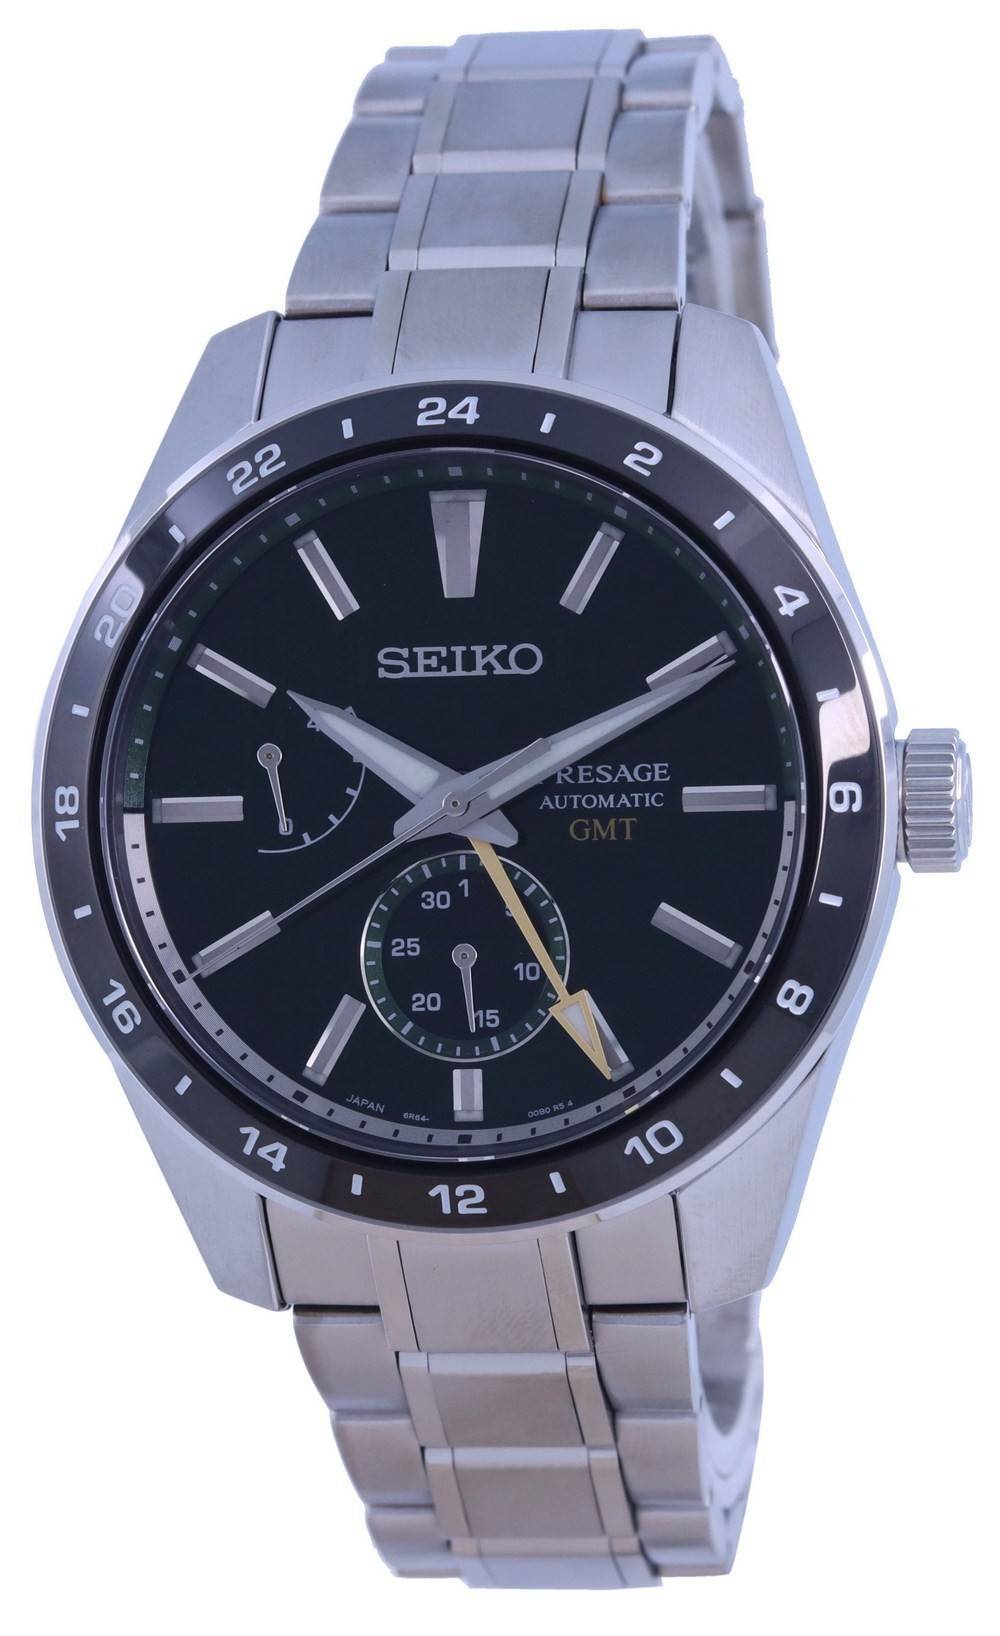 Đồng hồ Seiko Presage Sharp Edged GMT Automatic SPB219 SPB219J1 SPB219J  100M Đồng hồ nam vi